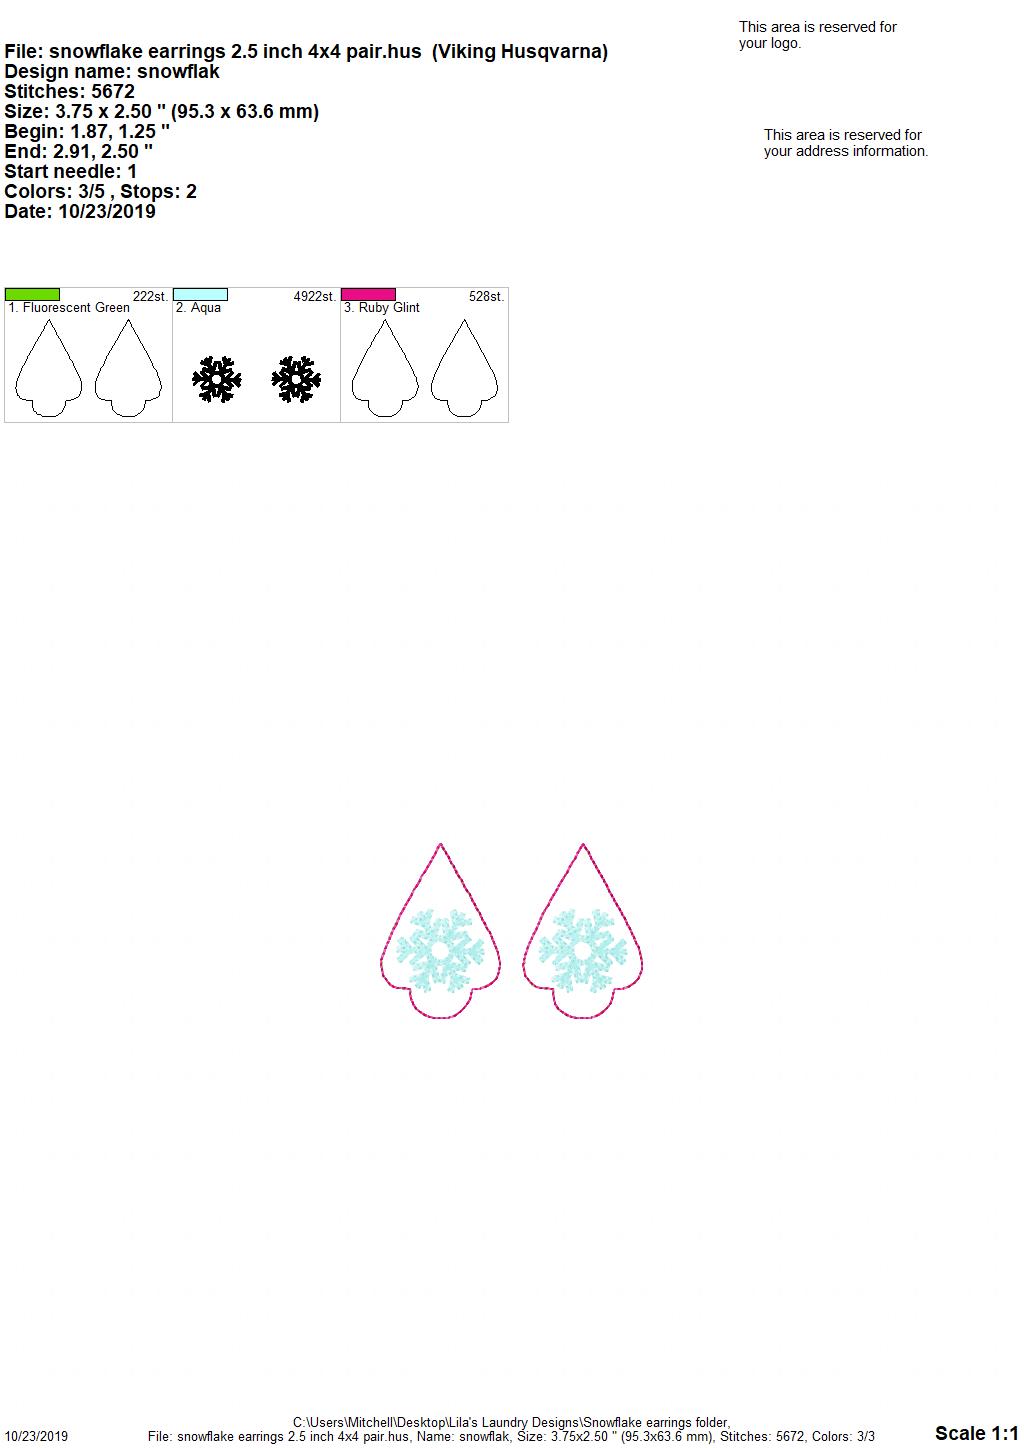 Snowflake Earrings - 3 sizes - Digital Embroidery Design